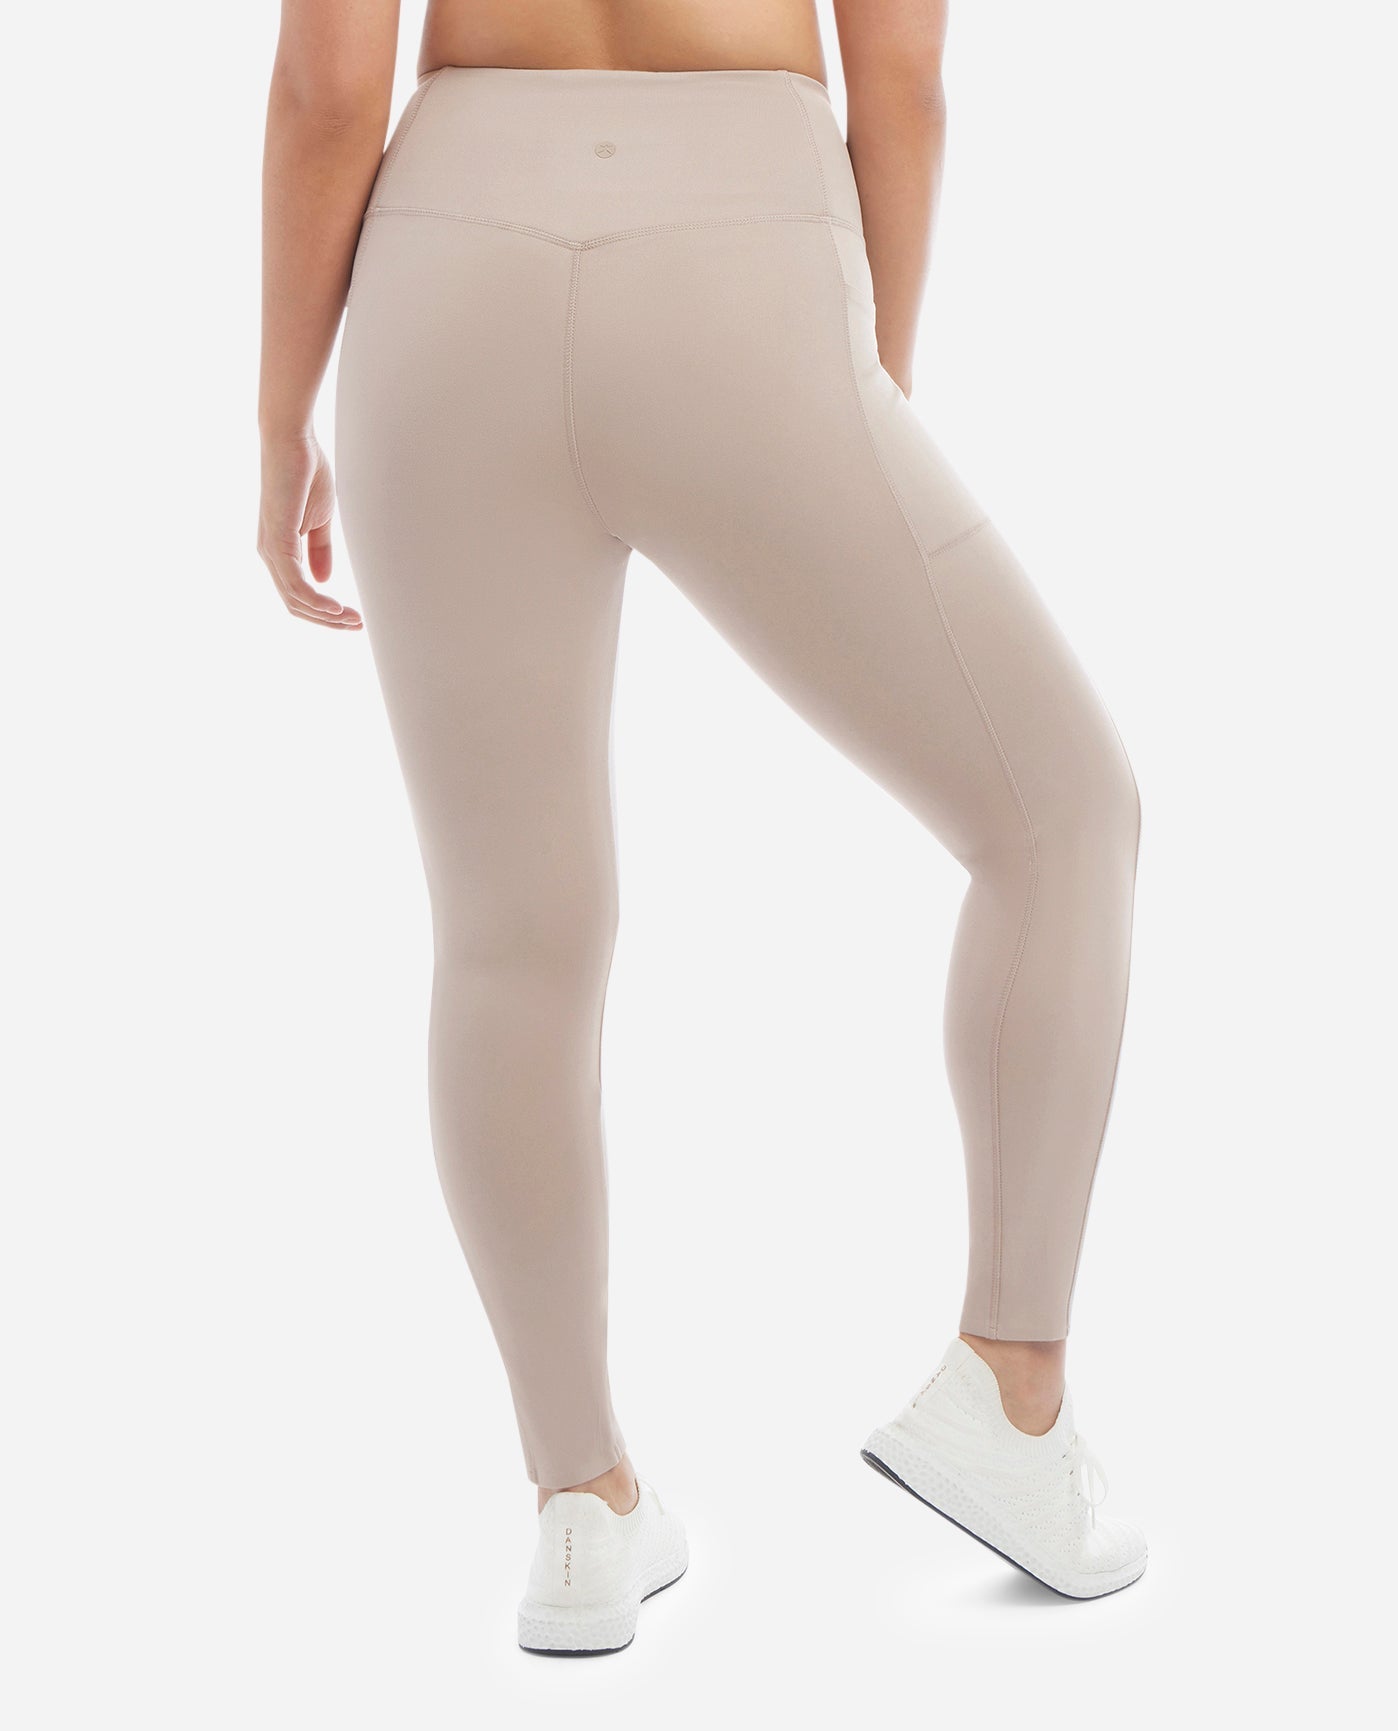 shandylan Solid Color Yoga Pants Fast Dry High Waist Leggings